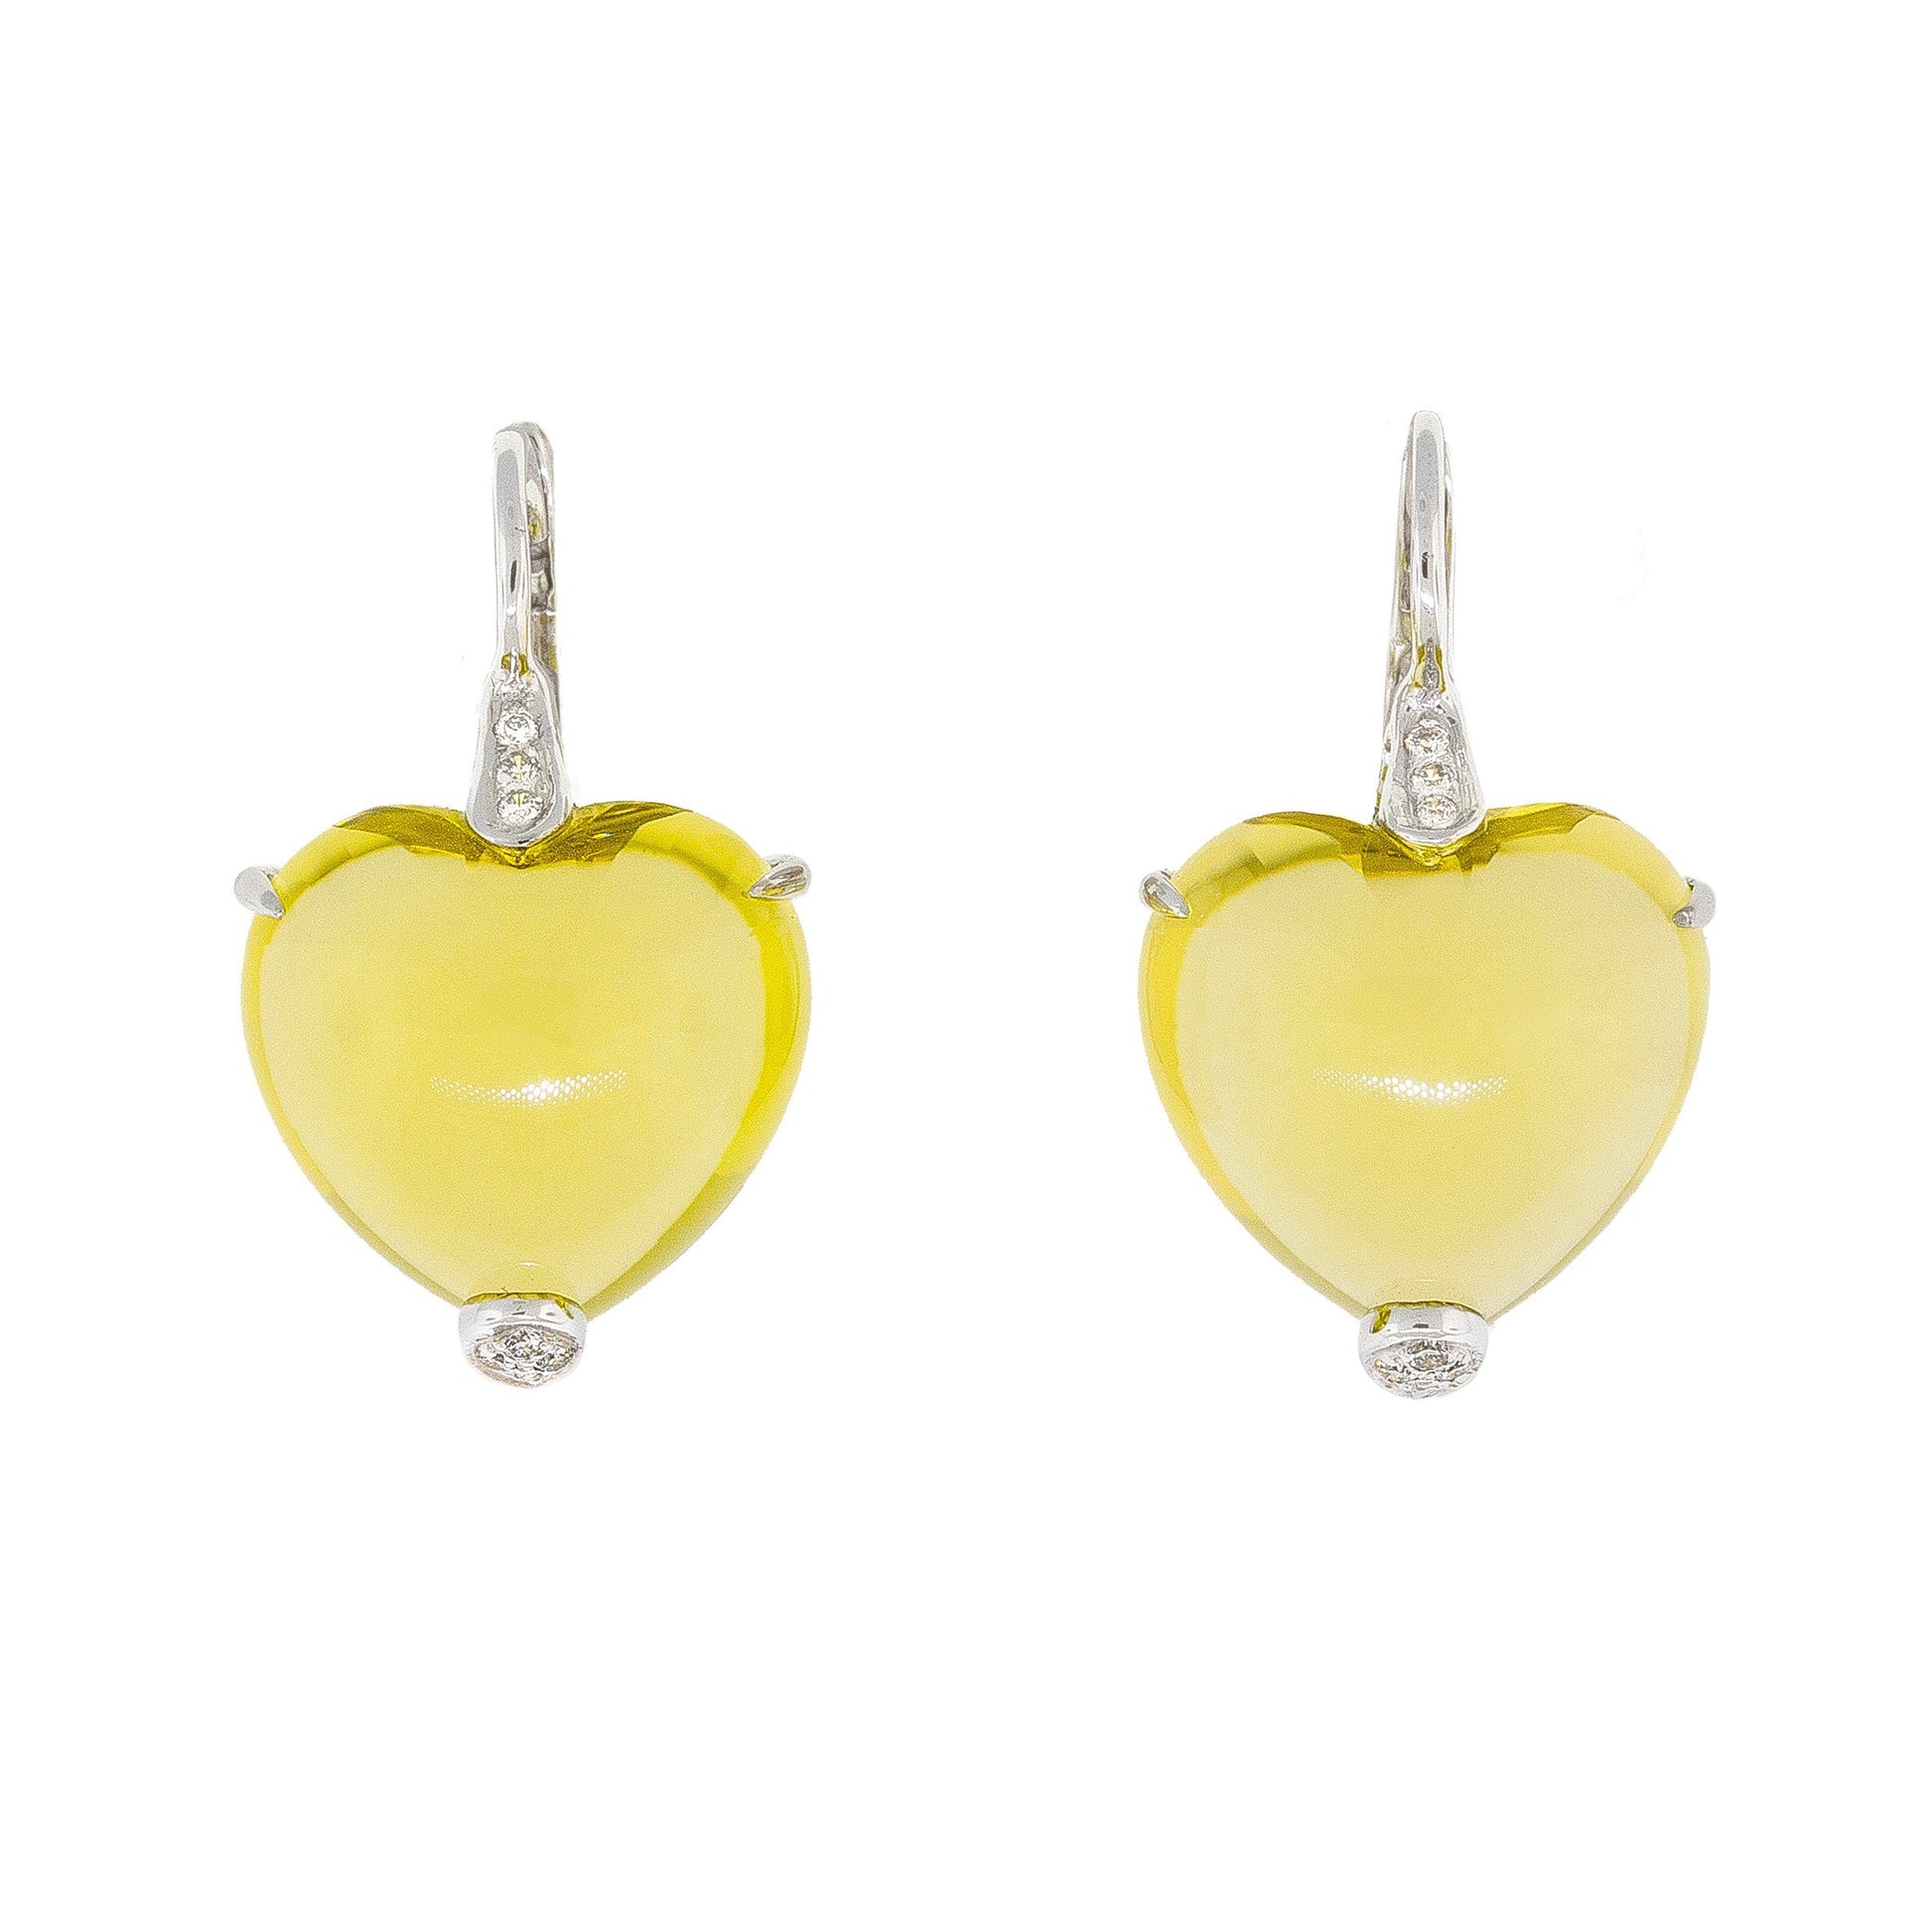  Yellow Lemon Earrings